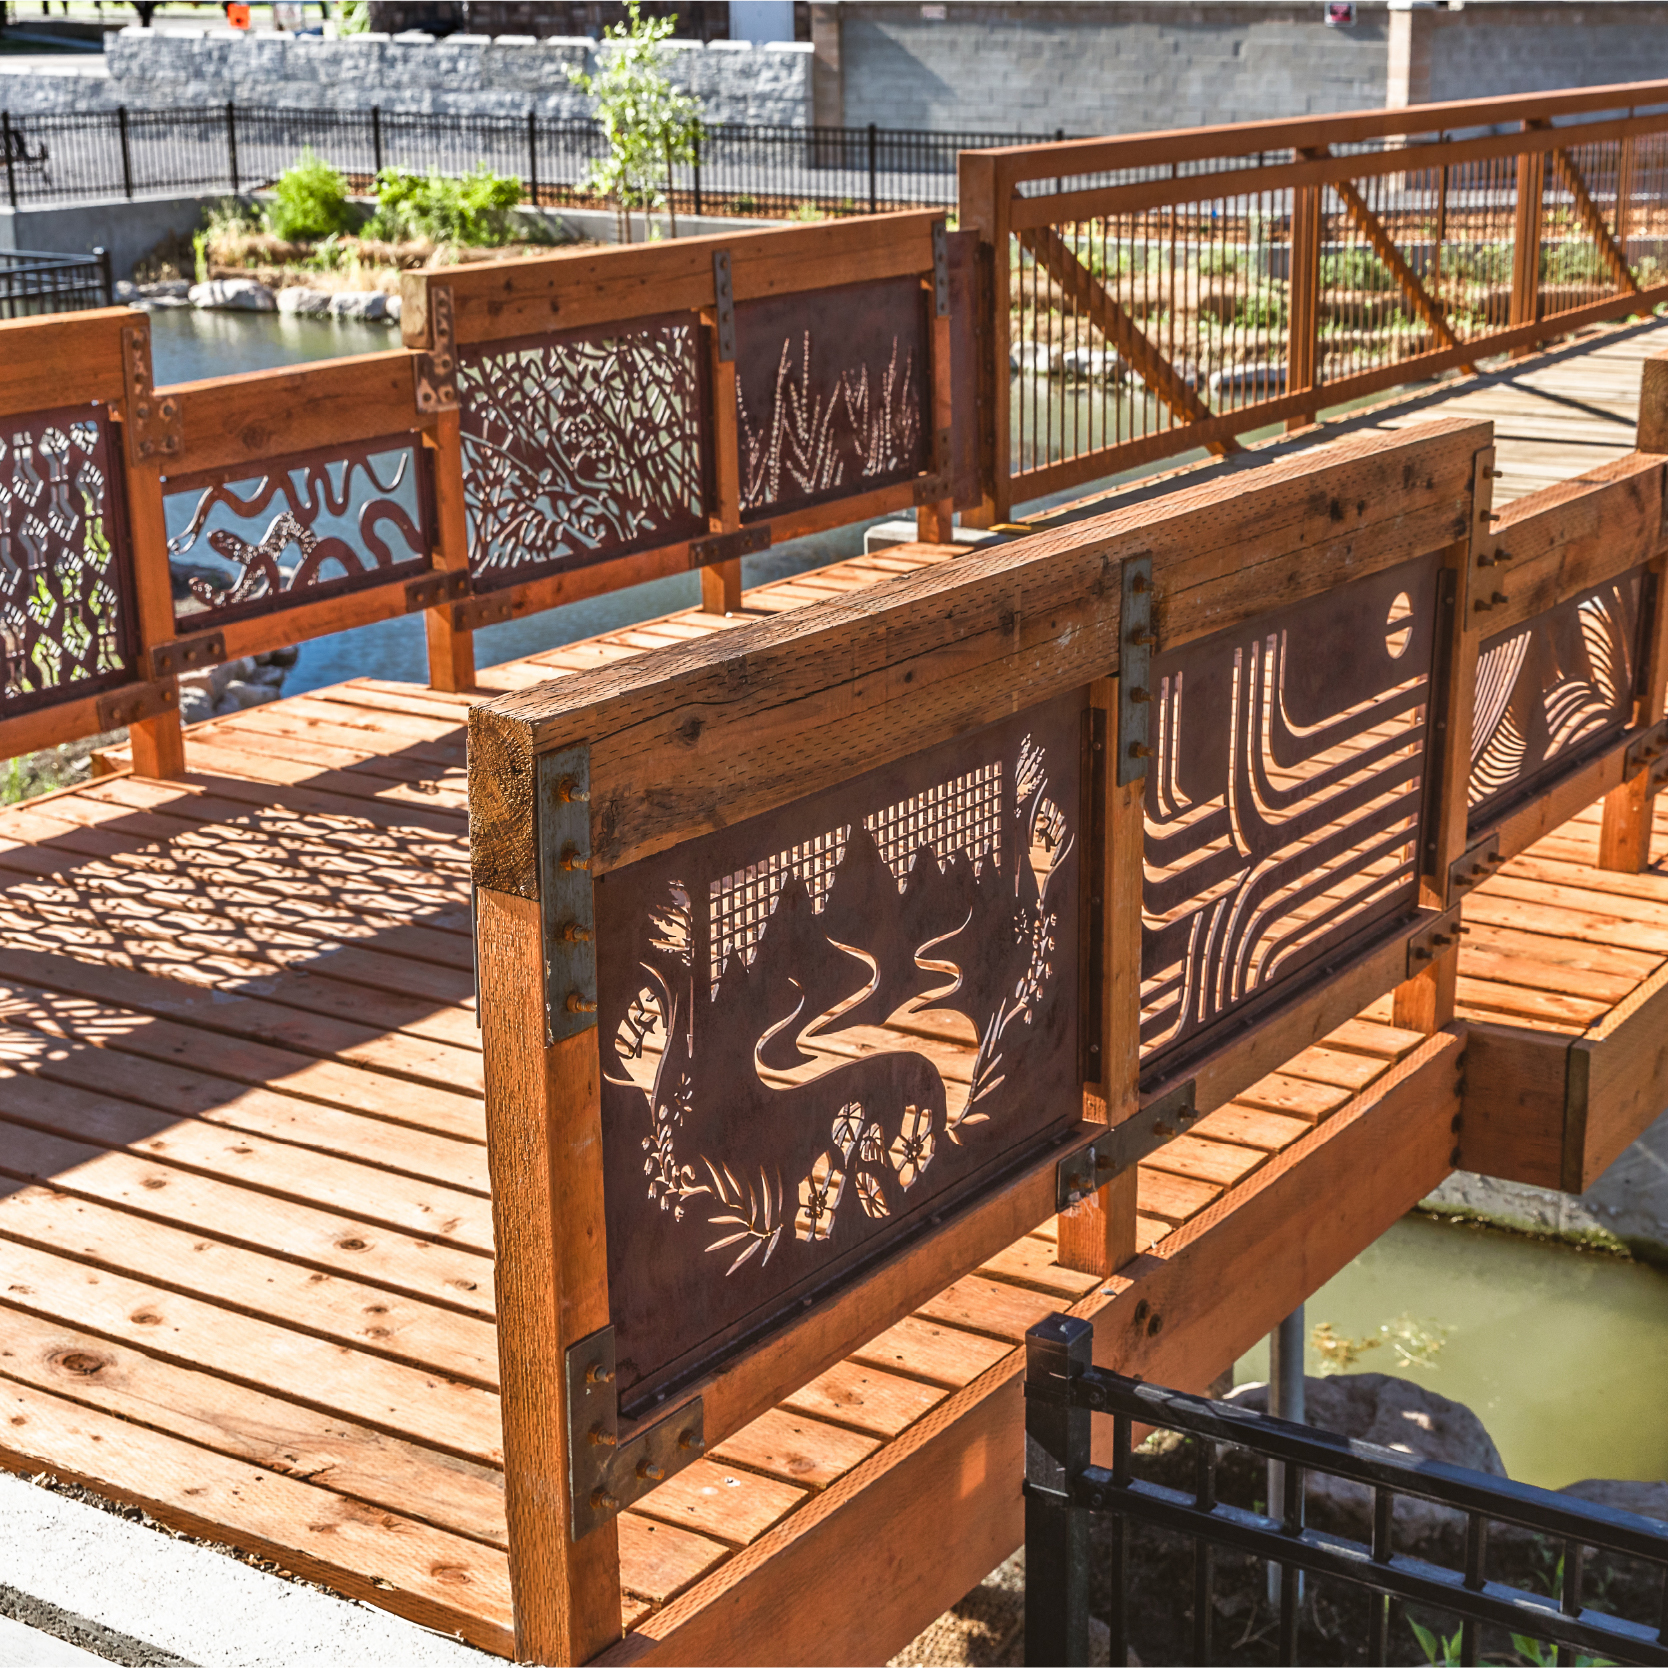 Three Creeks Confluence Bridge Art Installation in Salt Lake City